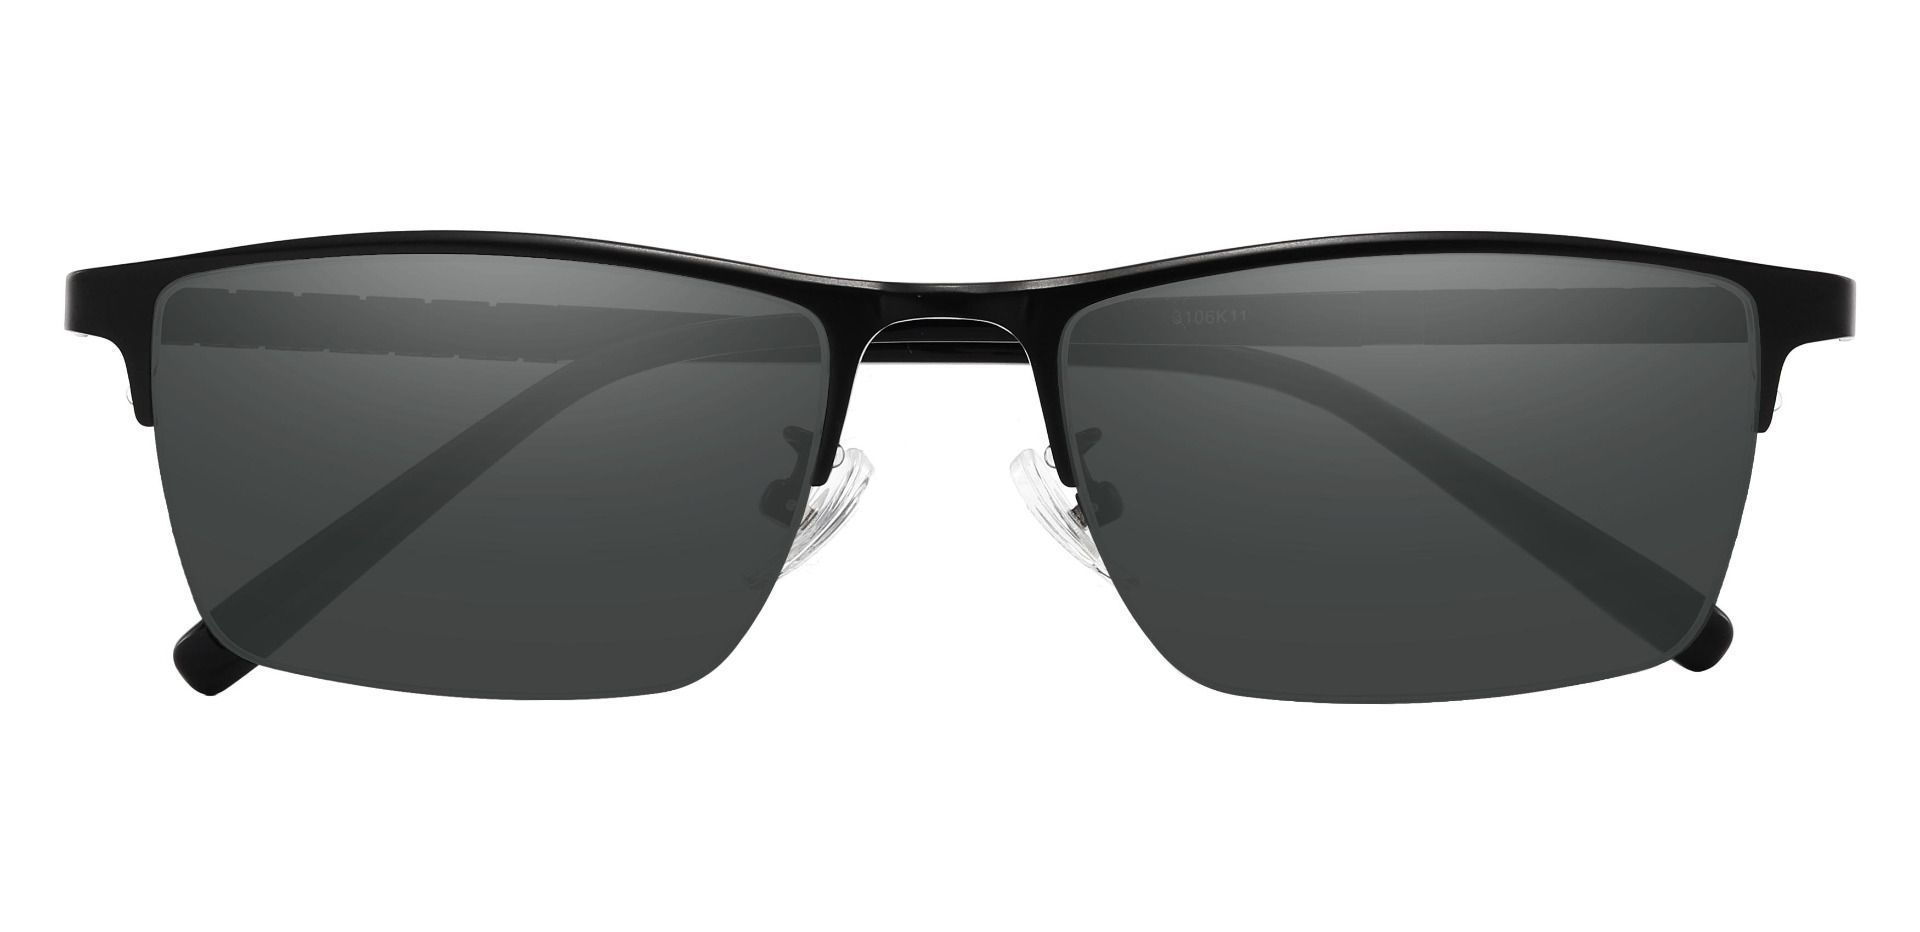 Maine Rectangle Reading Sunglasses - Black Frame With Gray Lenses